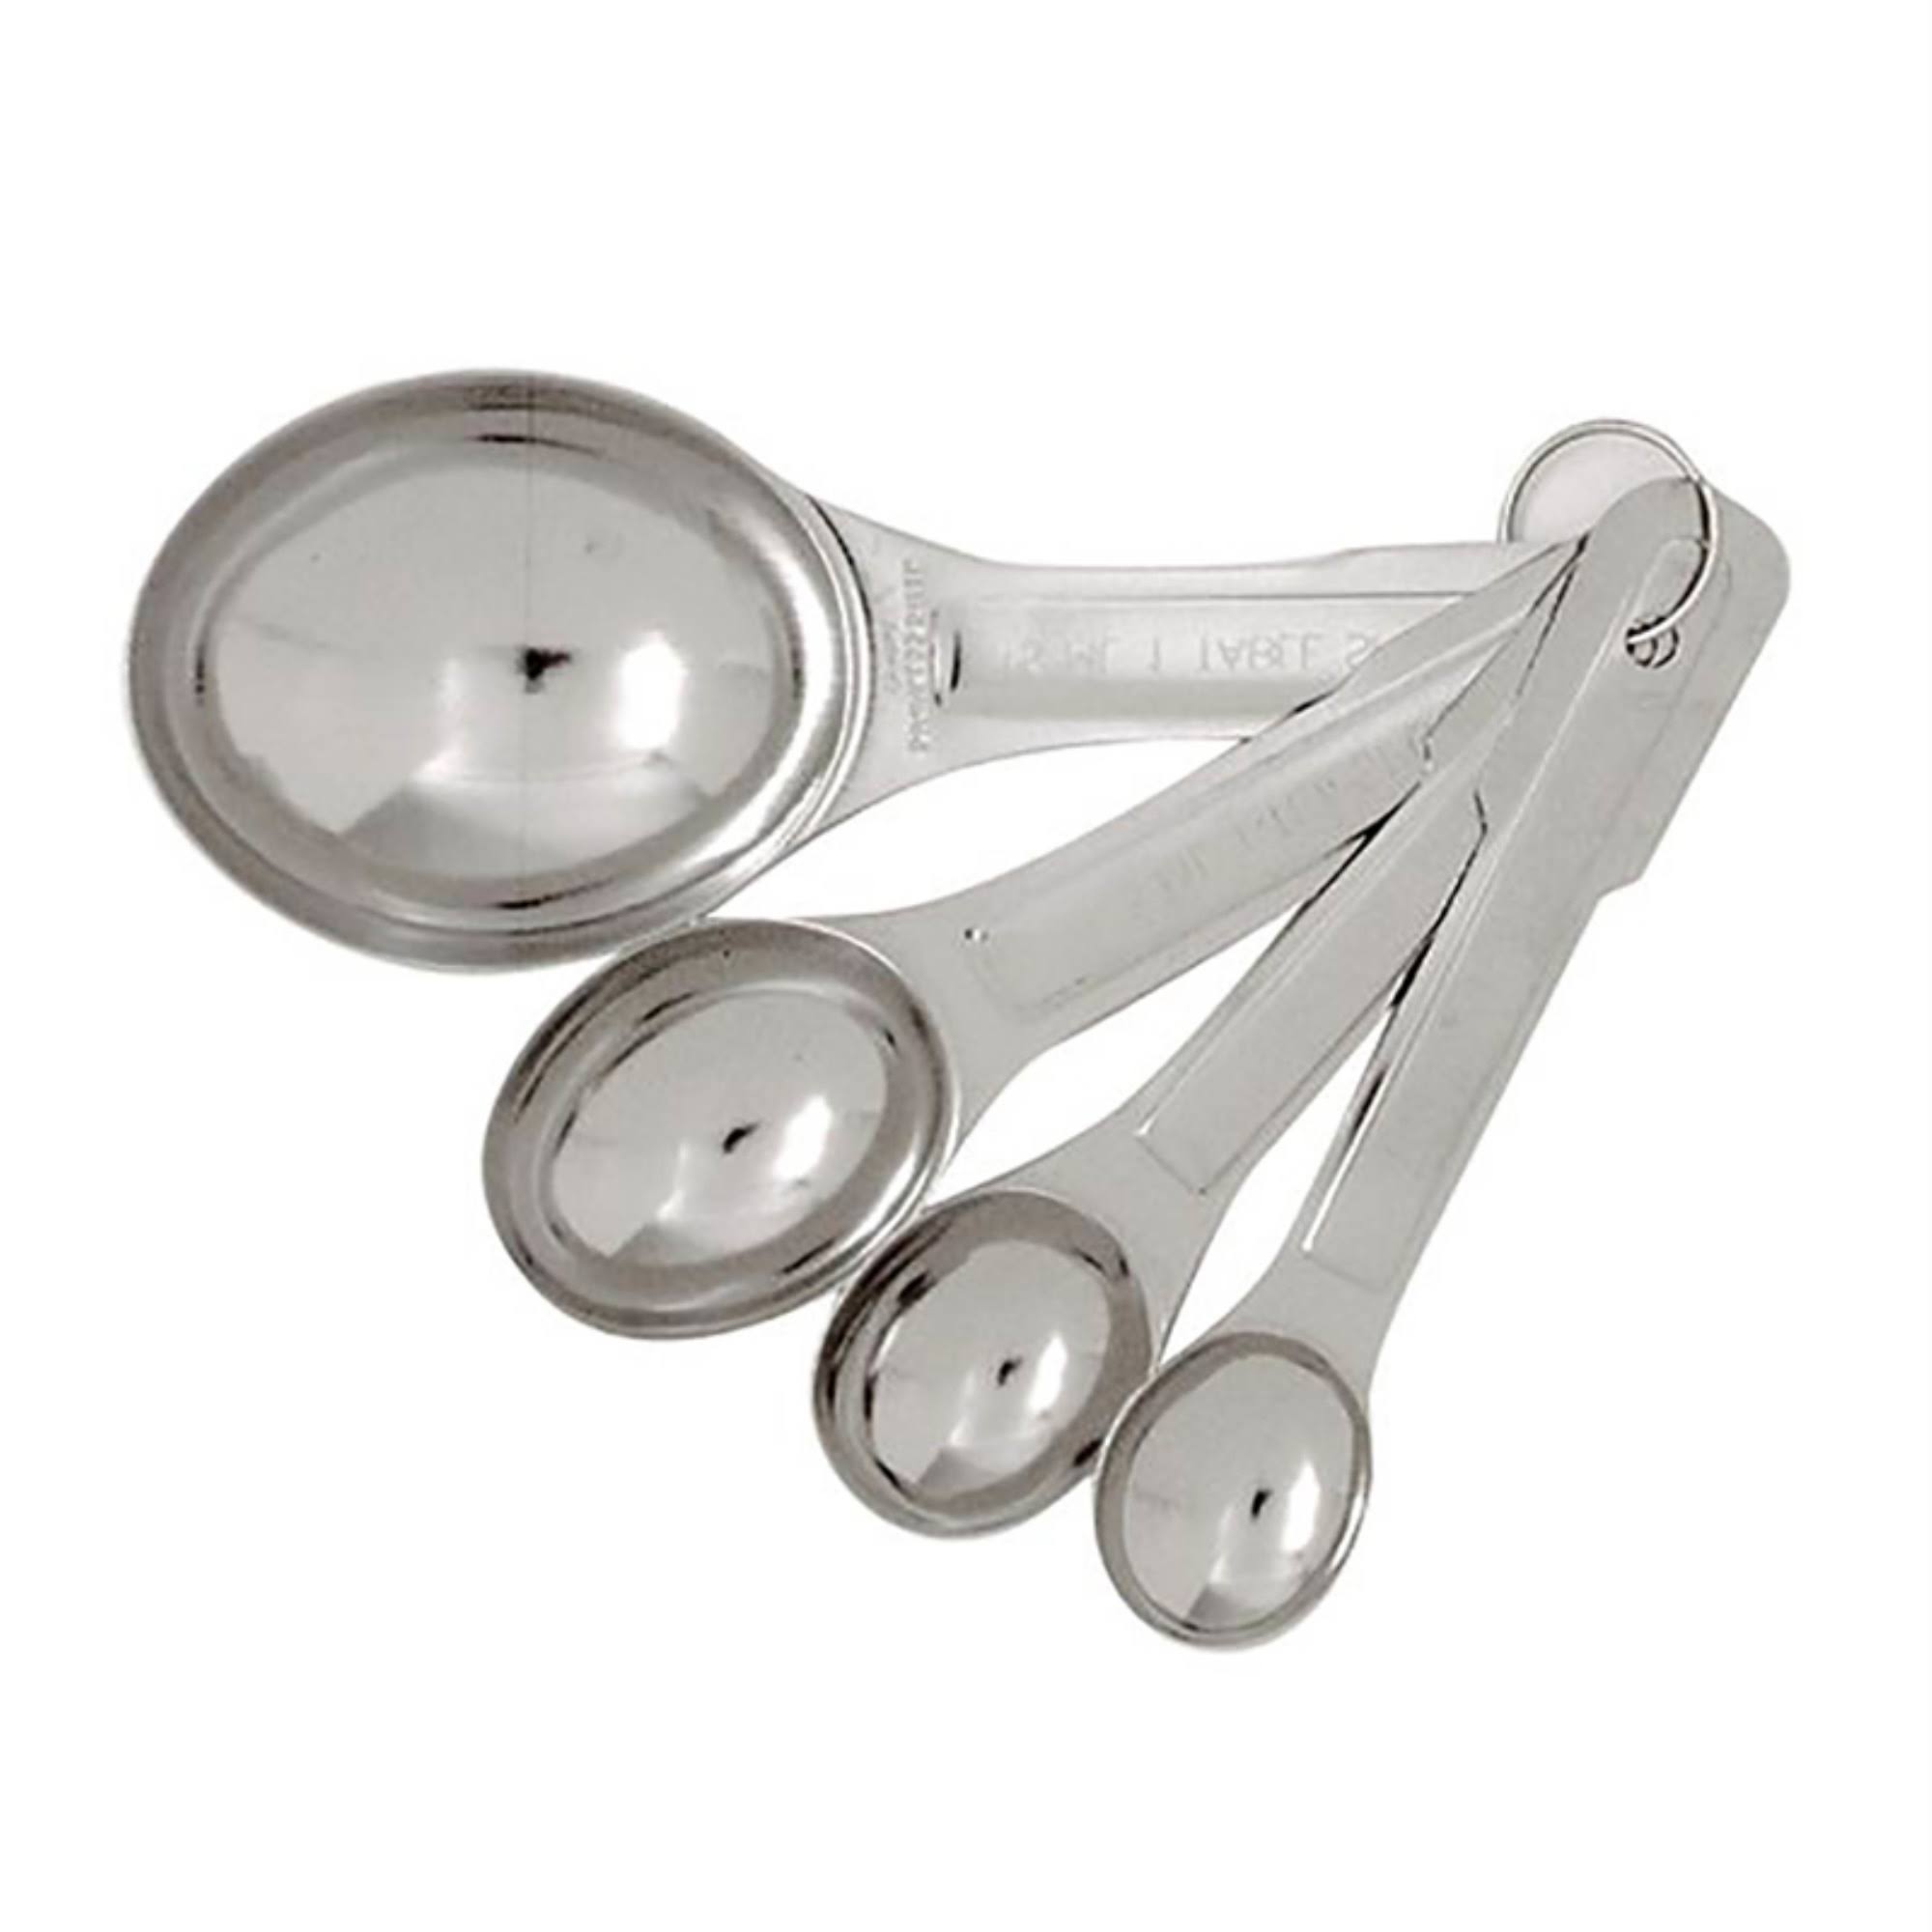 Norpro Stainless Steel Measuring Spoon Set - Set of 4